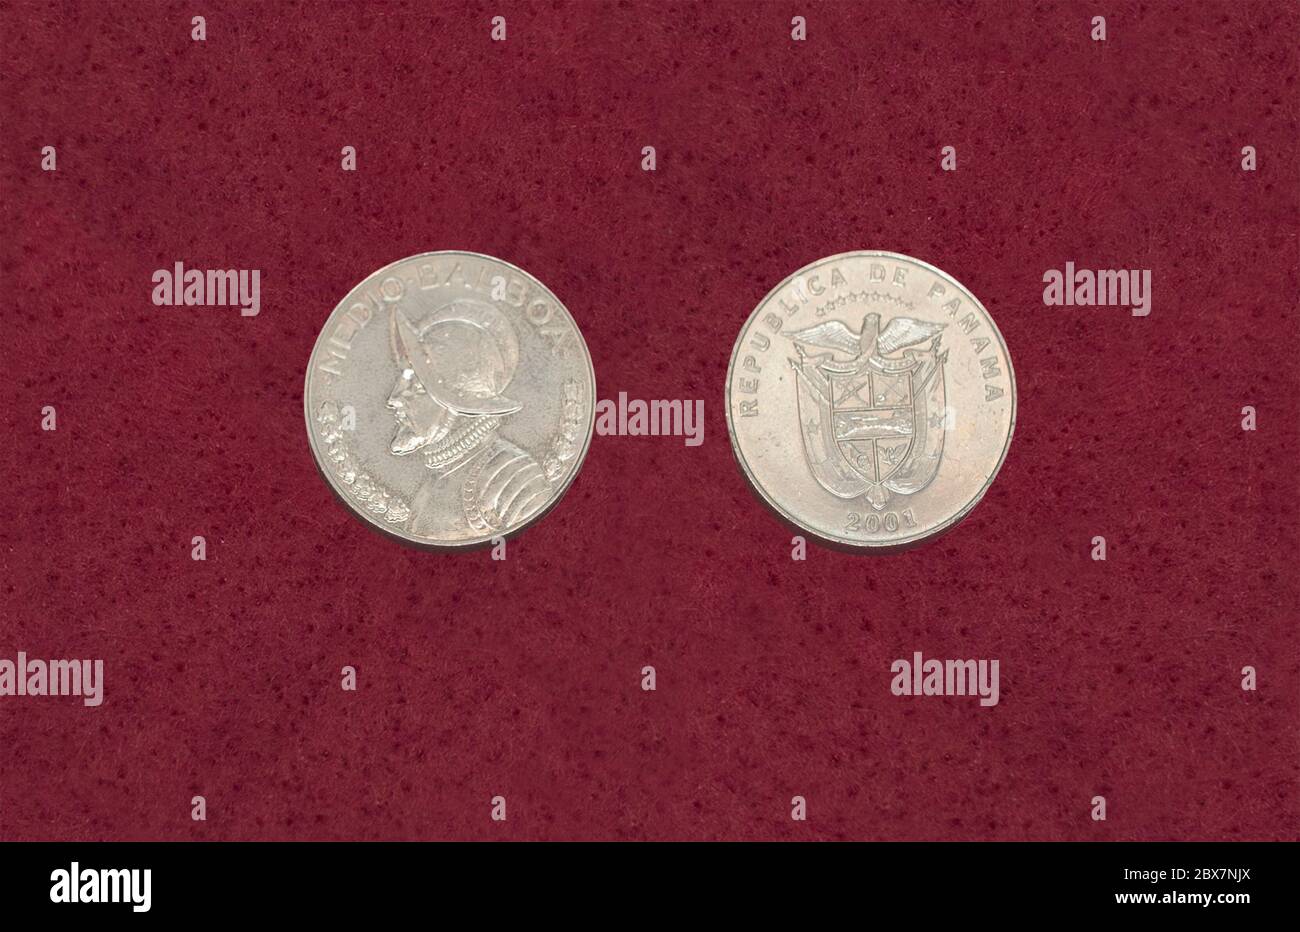 Panama official currency in honor of the Spanish explorer Vasco Nunez de Balboa. Balboa House-Muse Stock Photo